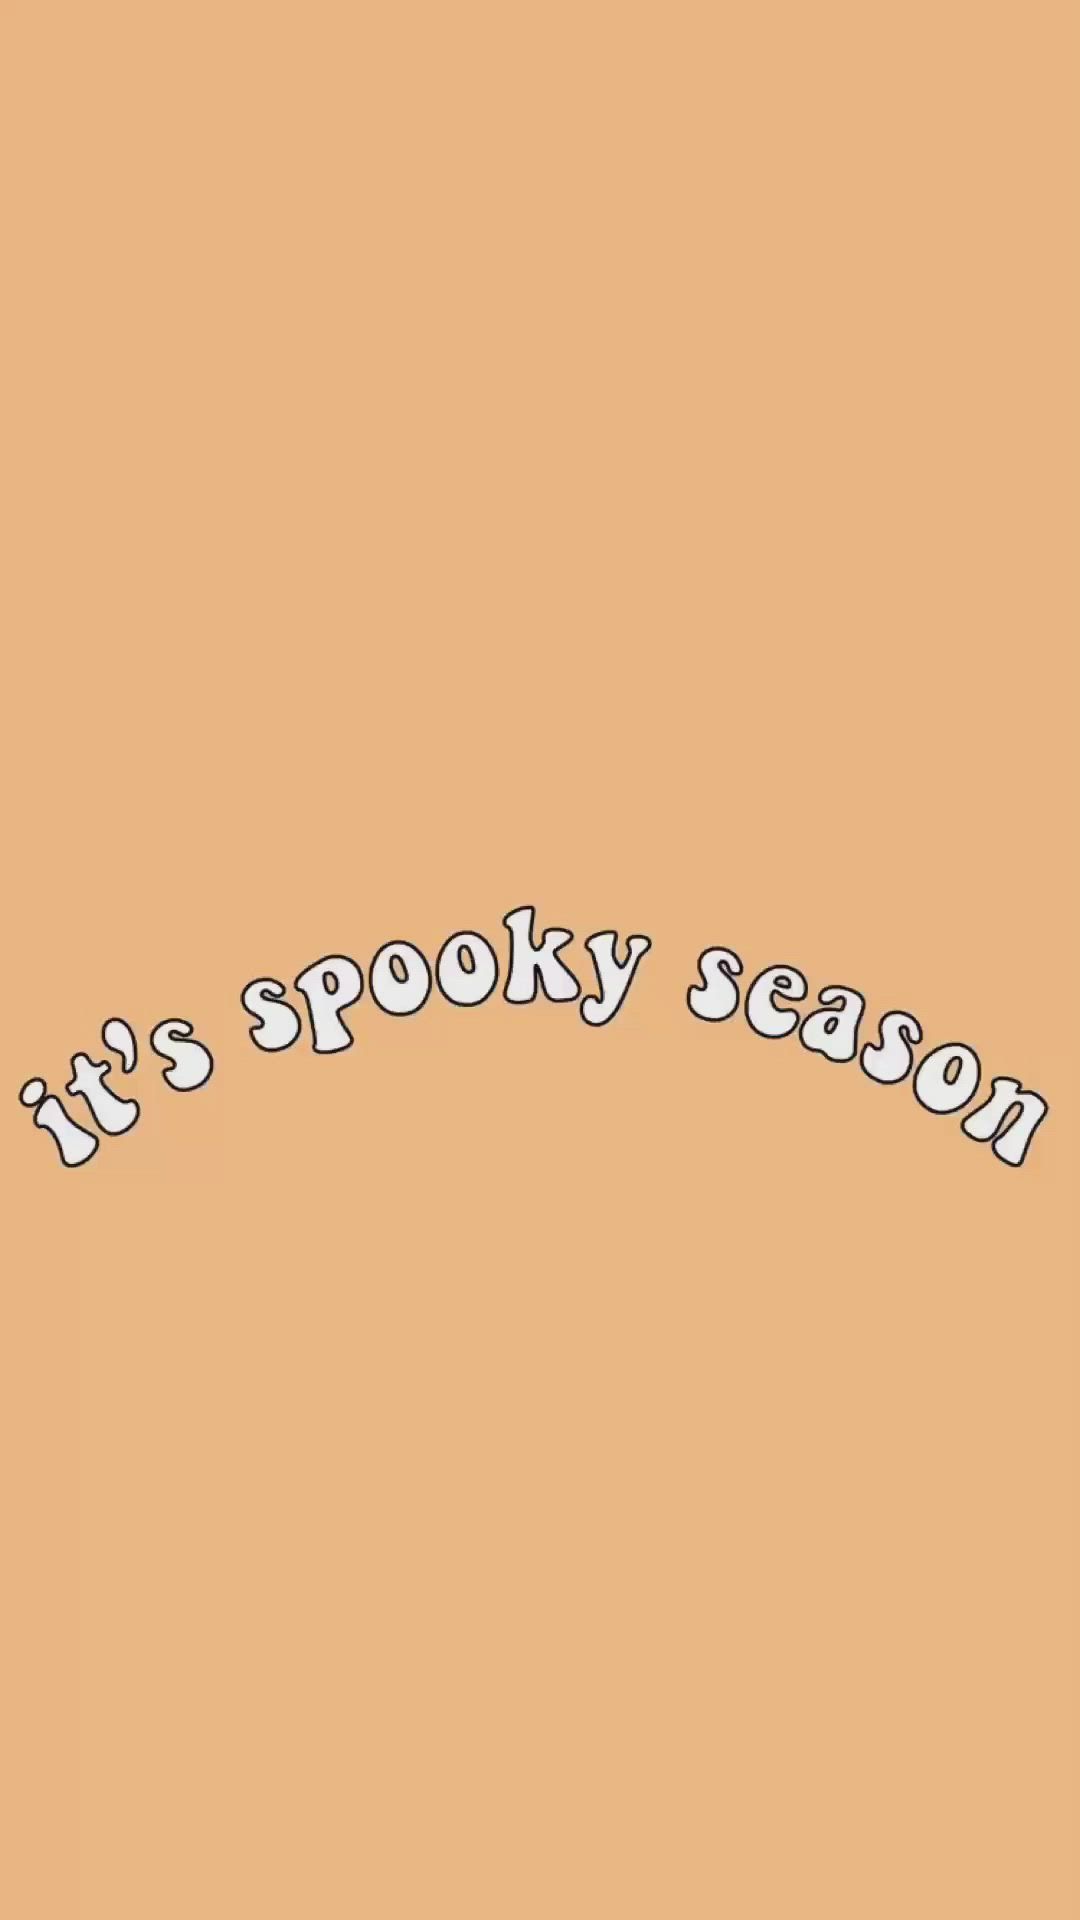 Its spooky season wallpaper phone background - Halloween, cute Halloween